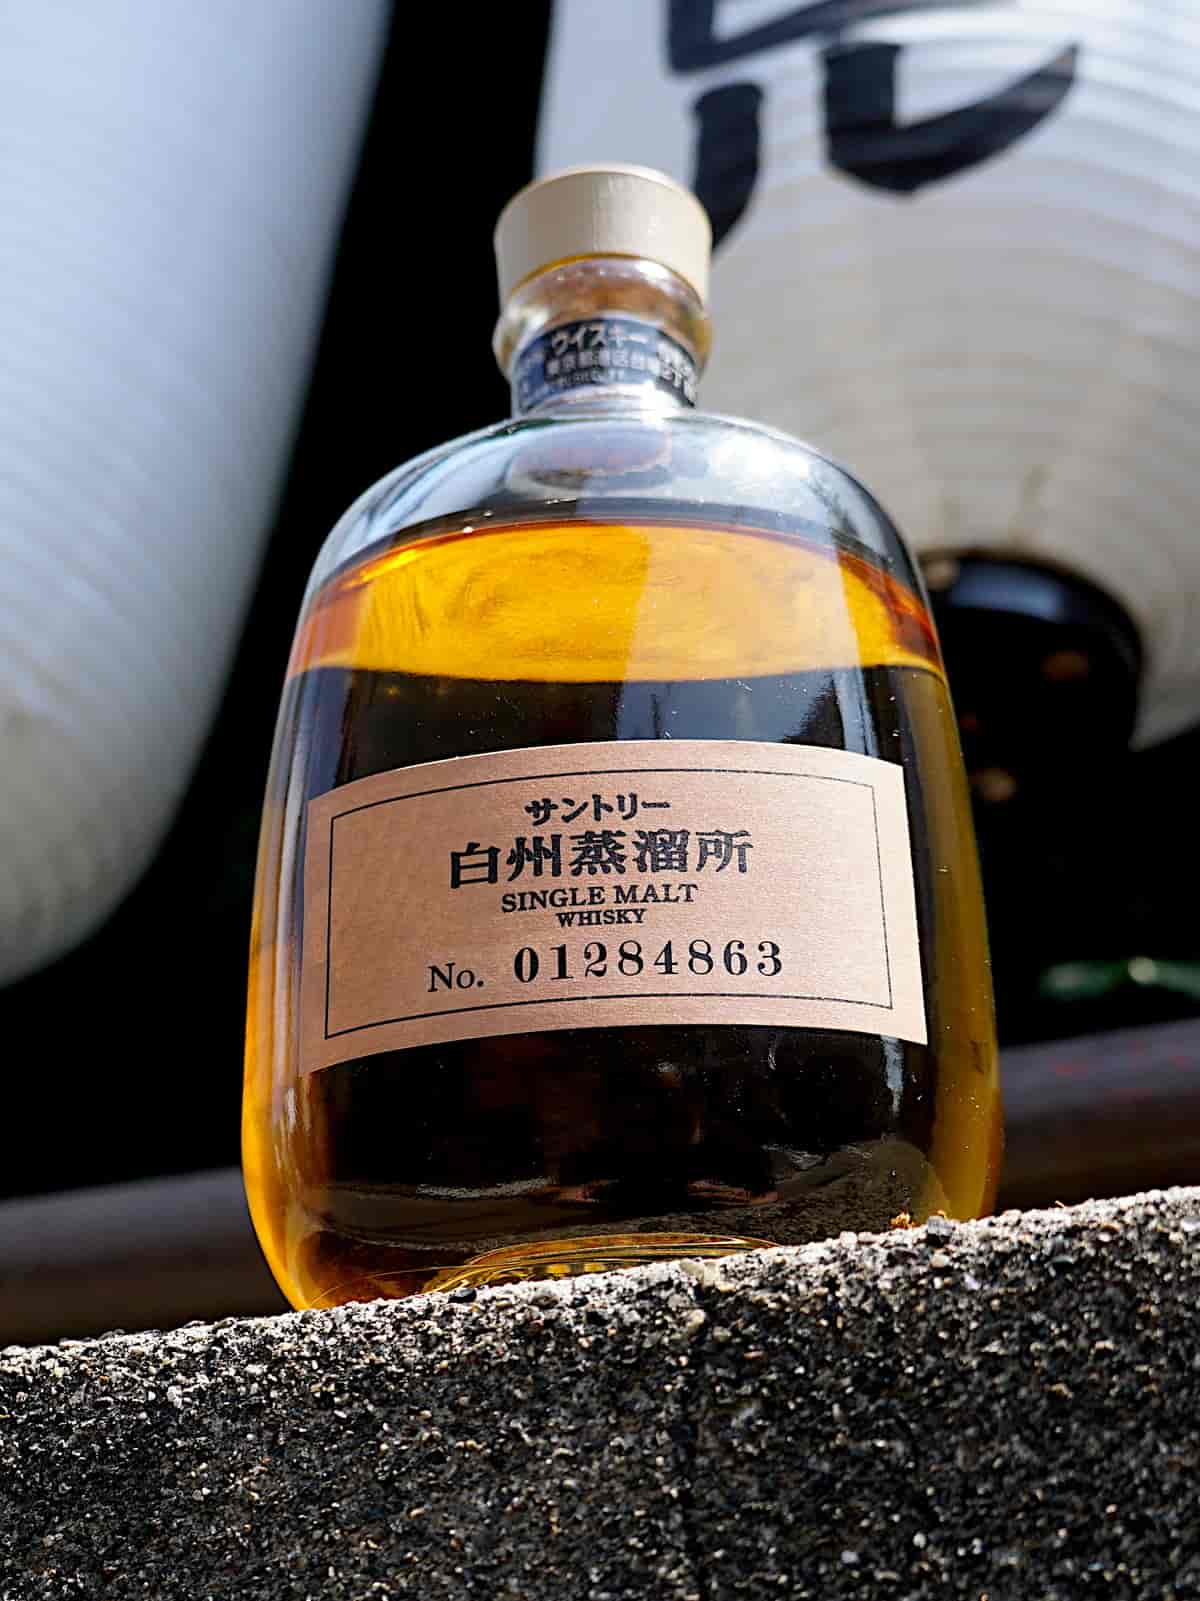 hakushu distillery release featured